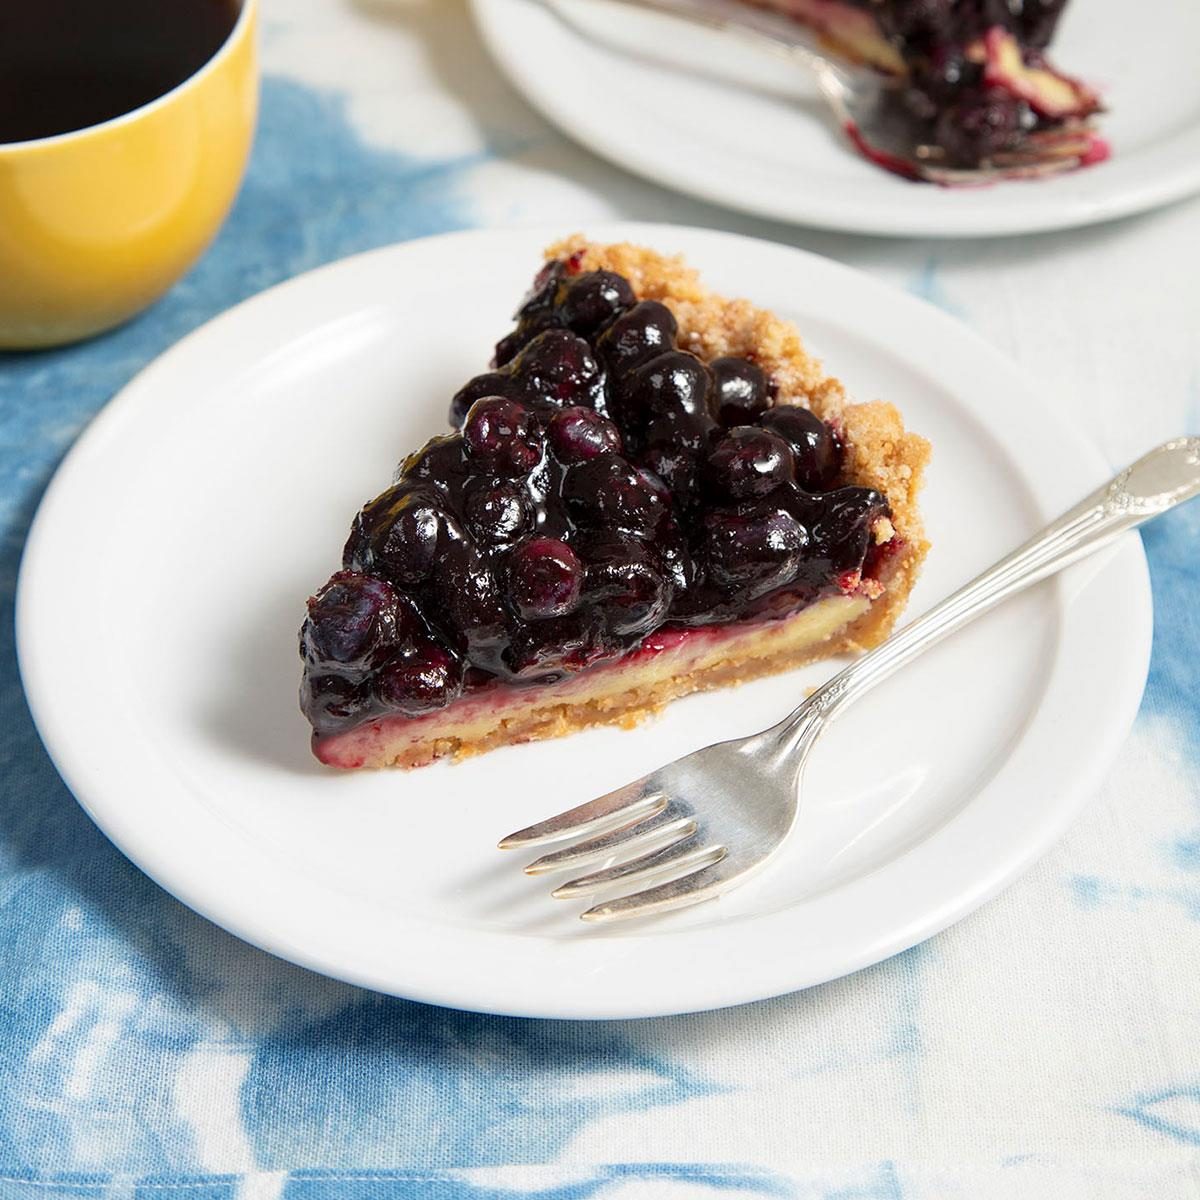 Blueberry Cream Pie Recipe: How to Make It